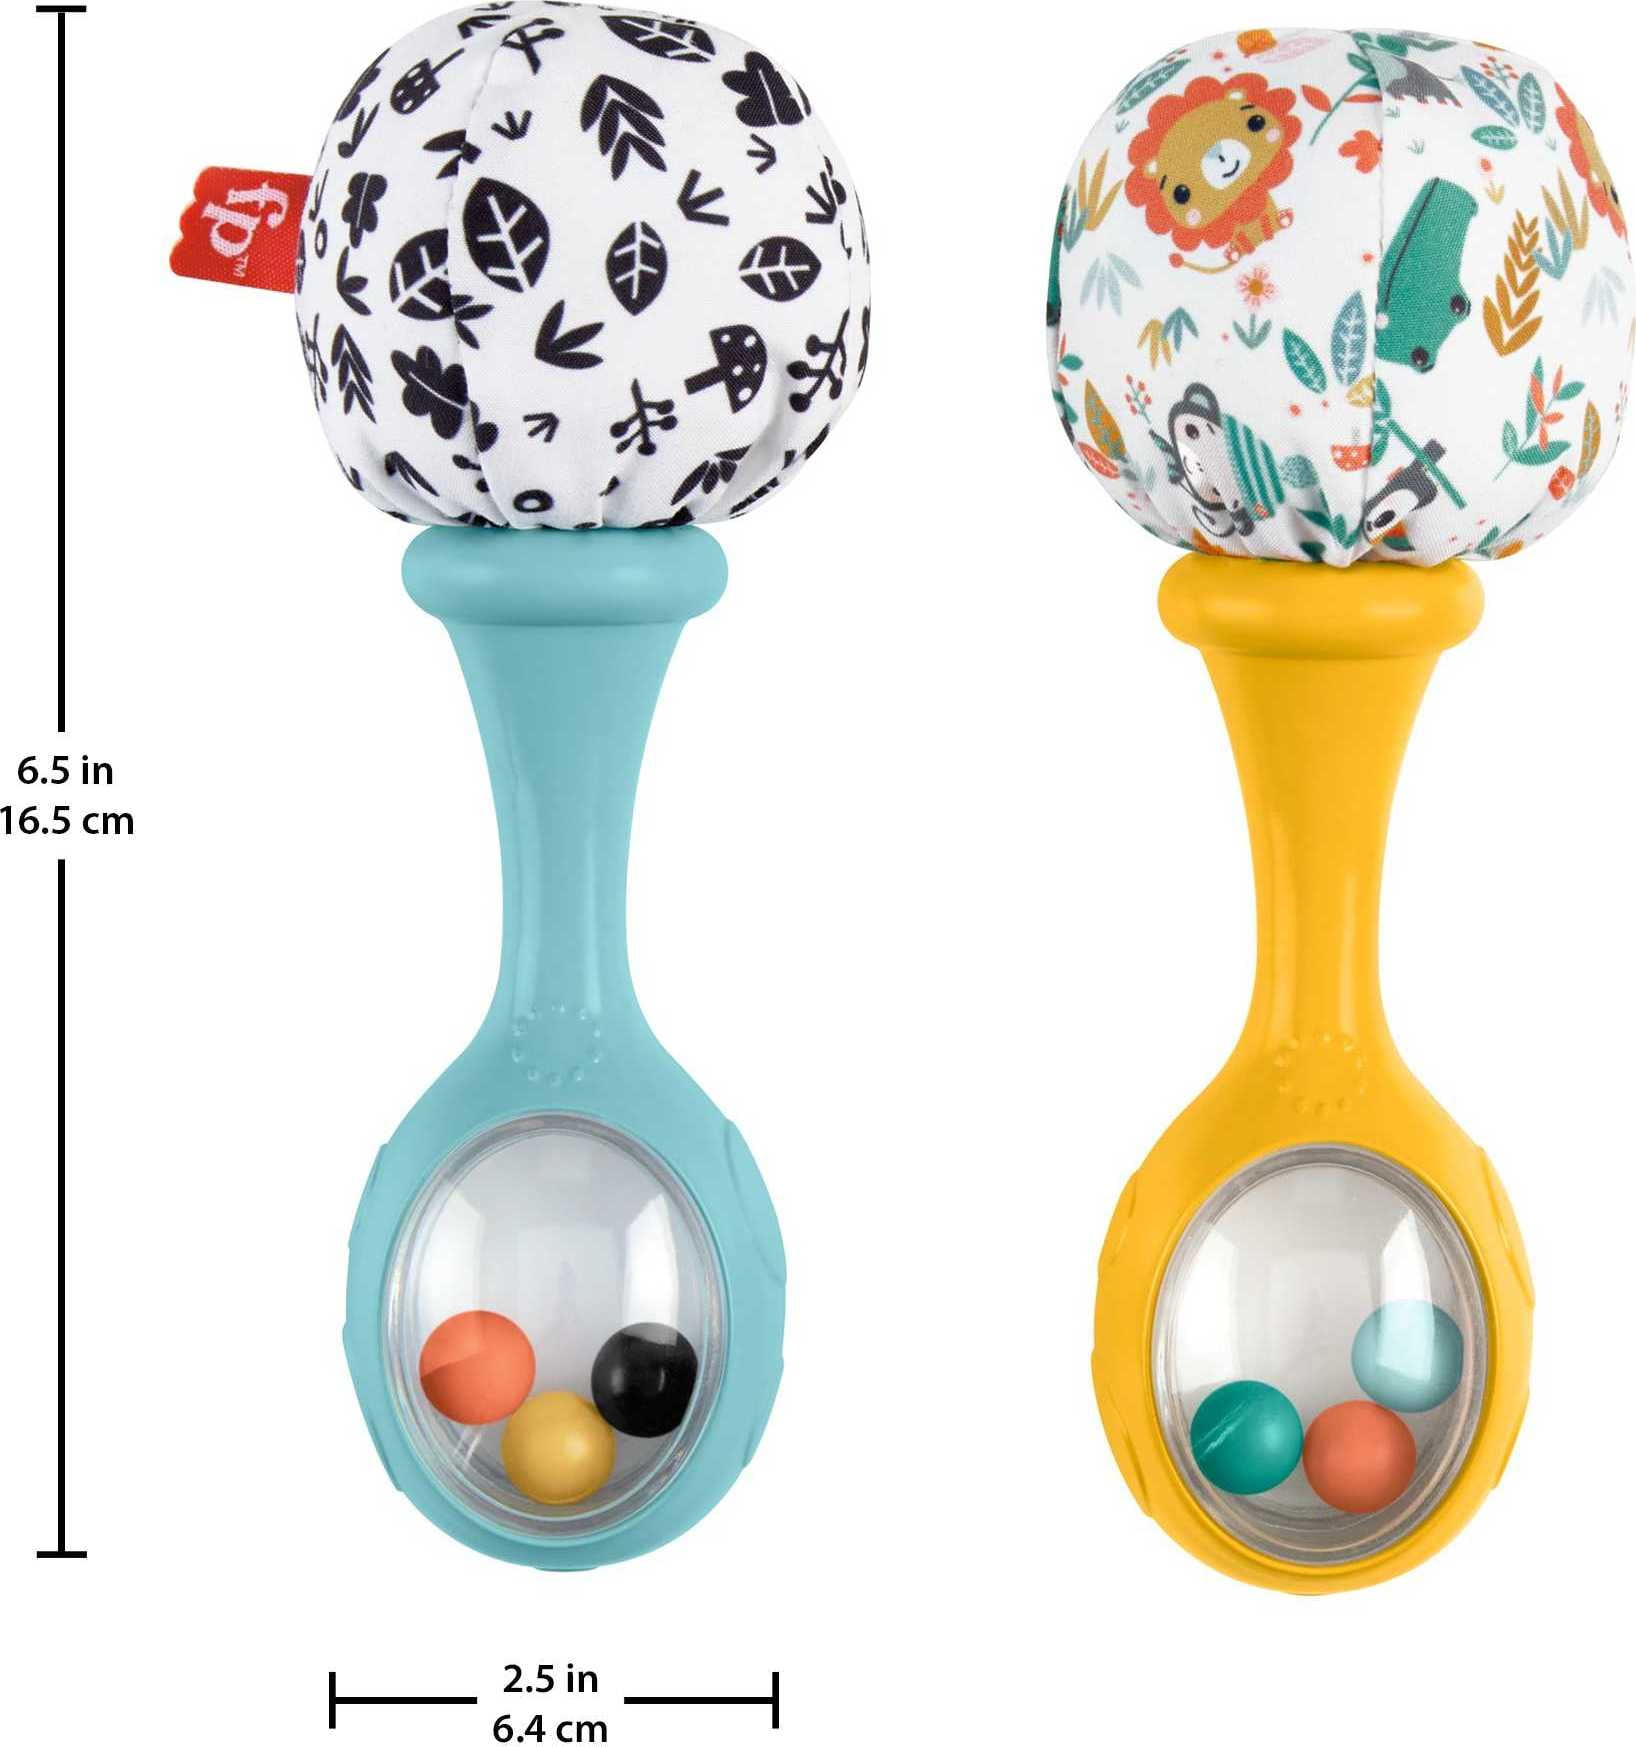 Fisher-Price Maracas Set Of 2 Newborn Toys Blue And Orange Rattle Rock  Maracas 887961628555